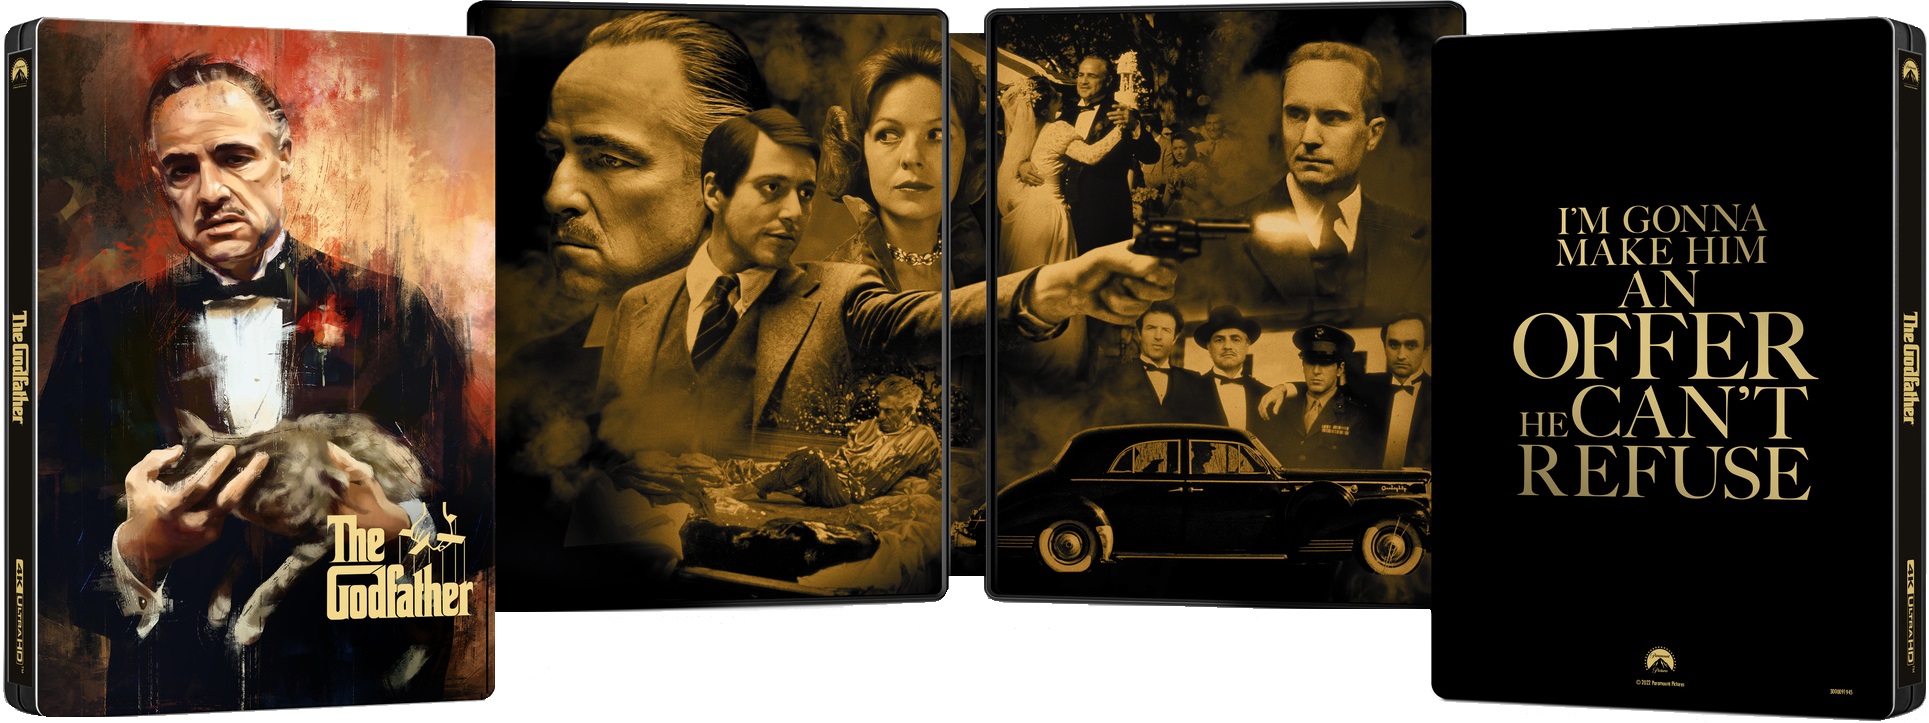 The Godfather: Limited Edition Steelbook [4K UHD + Digital Copy] - $12.99